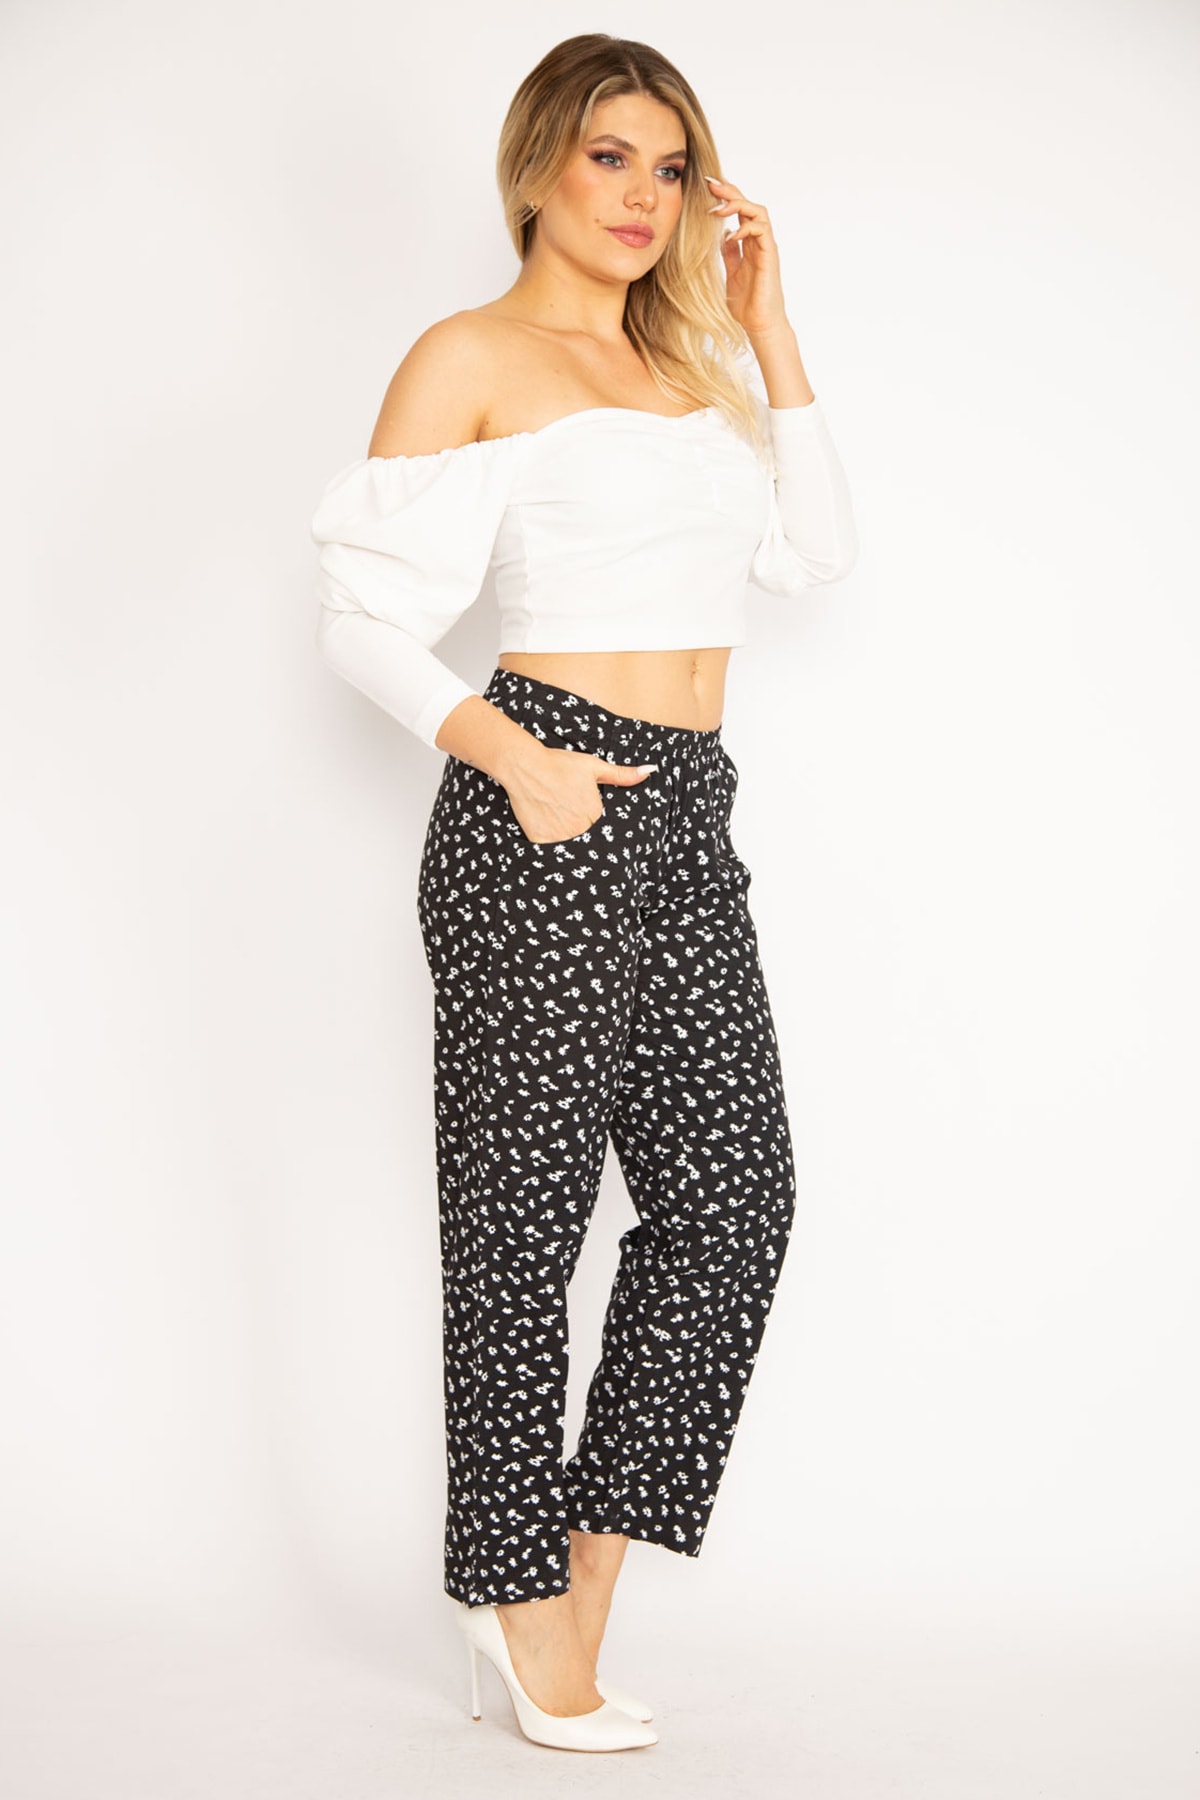 Şans Women's Plus Size Black Pants with Pockets with Elastic Waist, Floral Pattern